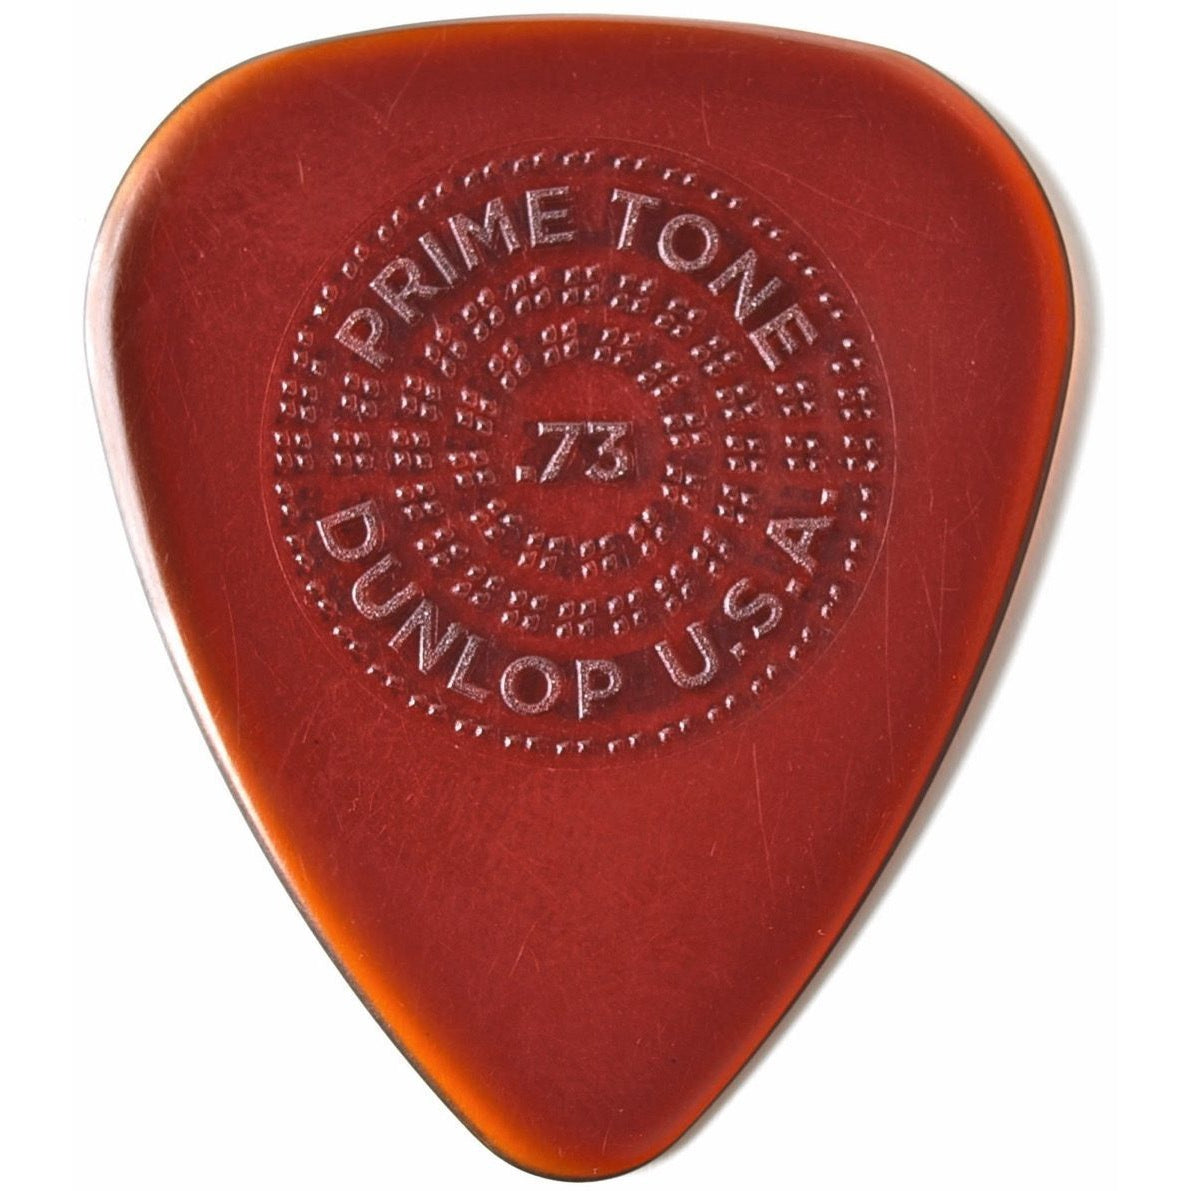 Dunlop 510P Primetone Standard Guitar Picks, 510P.73, 3-Pack, .73mm